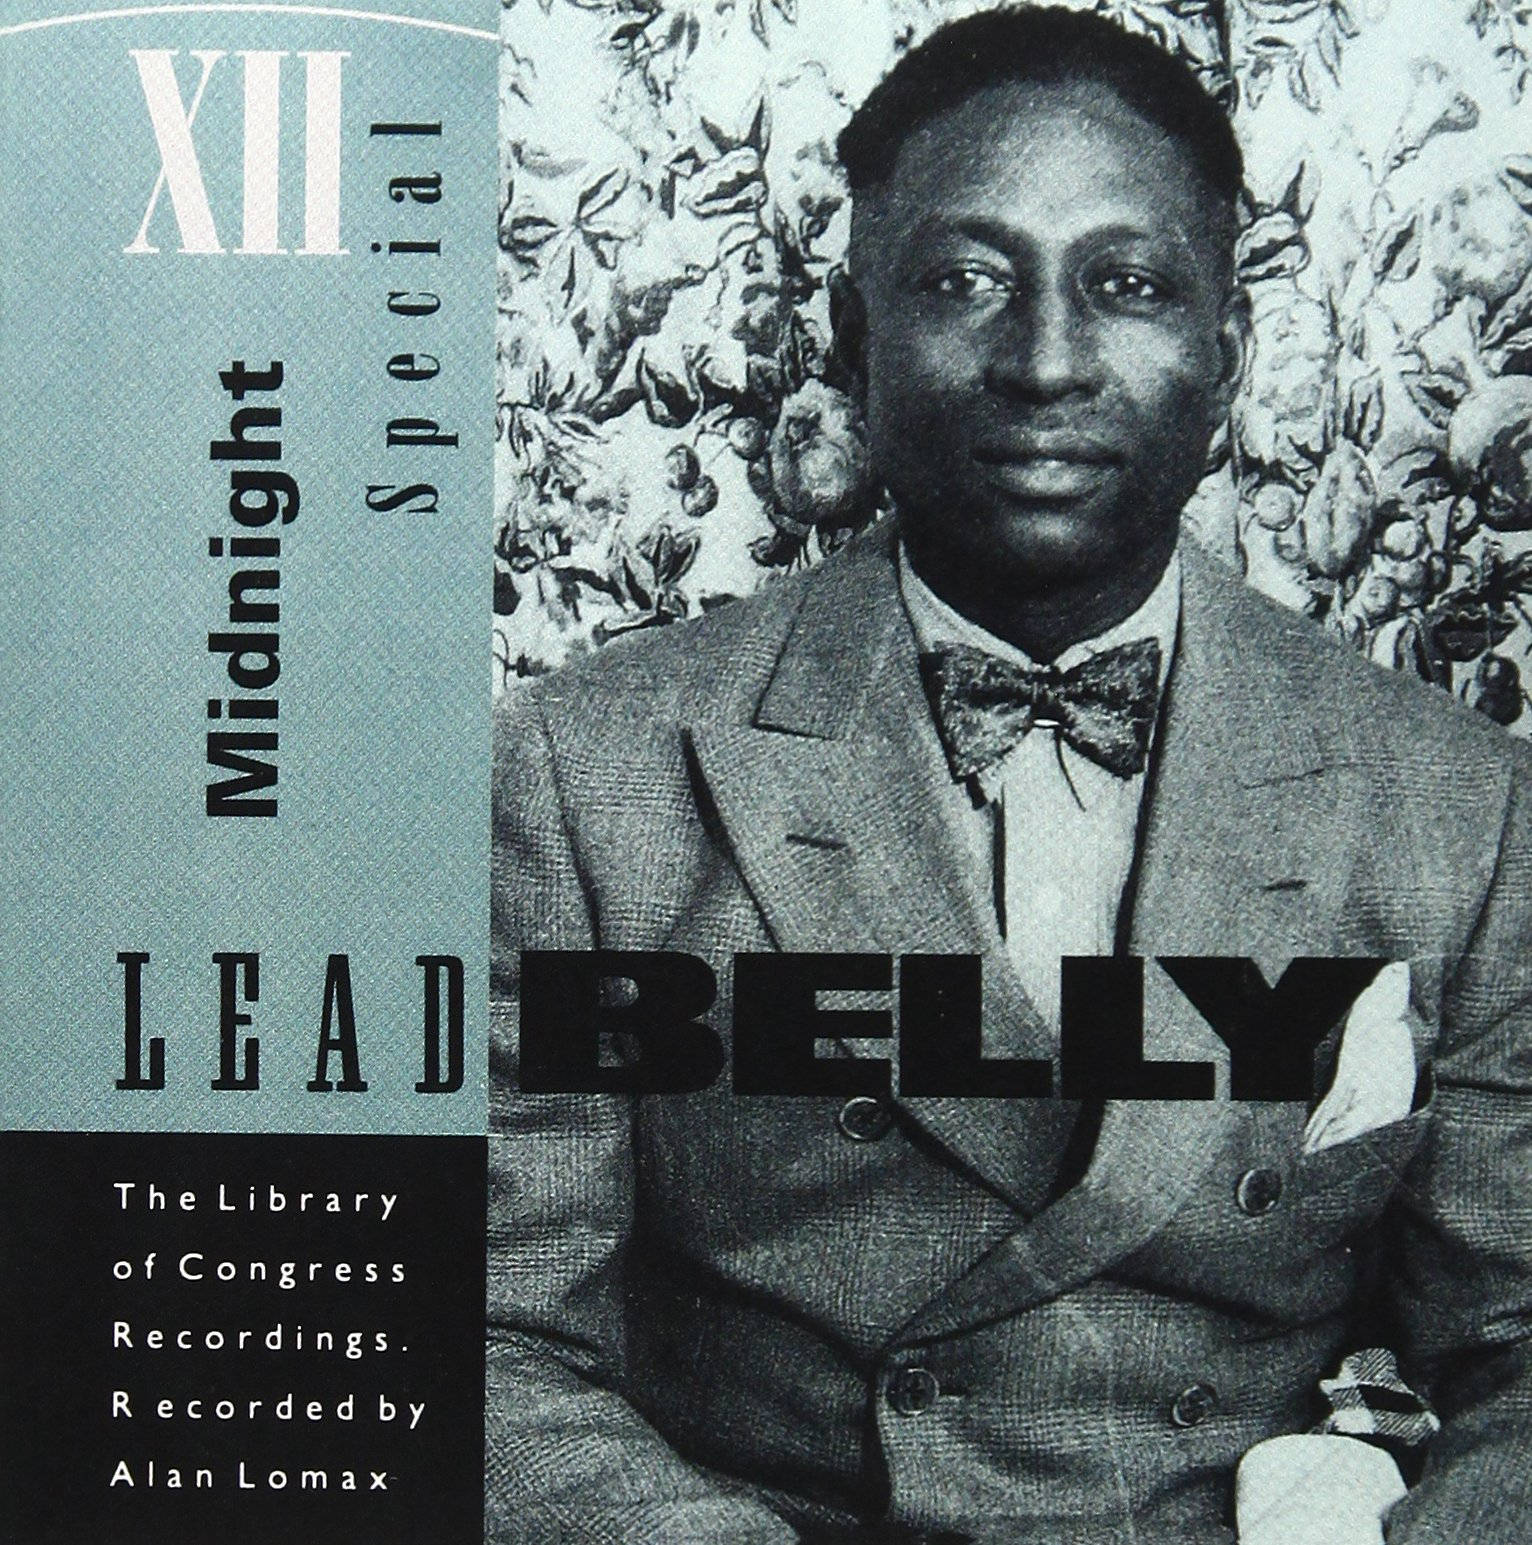 Black American Blues Singer Leadbelly Midnight Special Album Cover Wallpaper